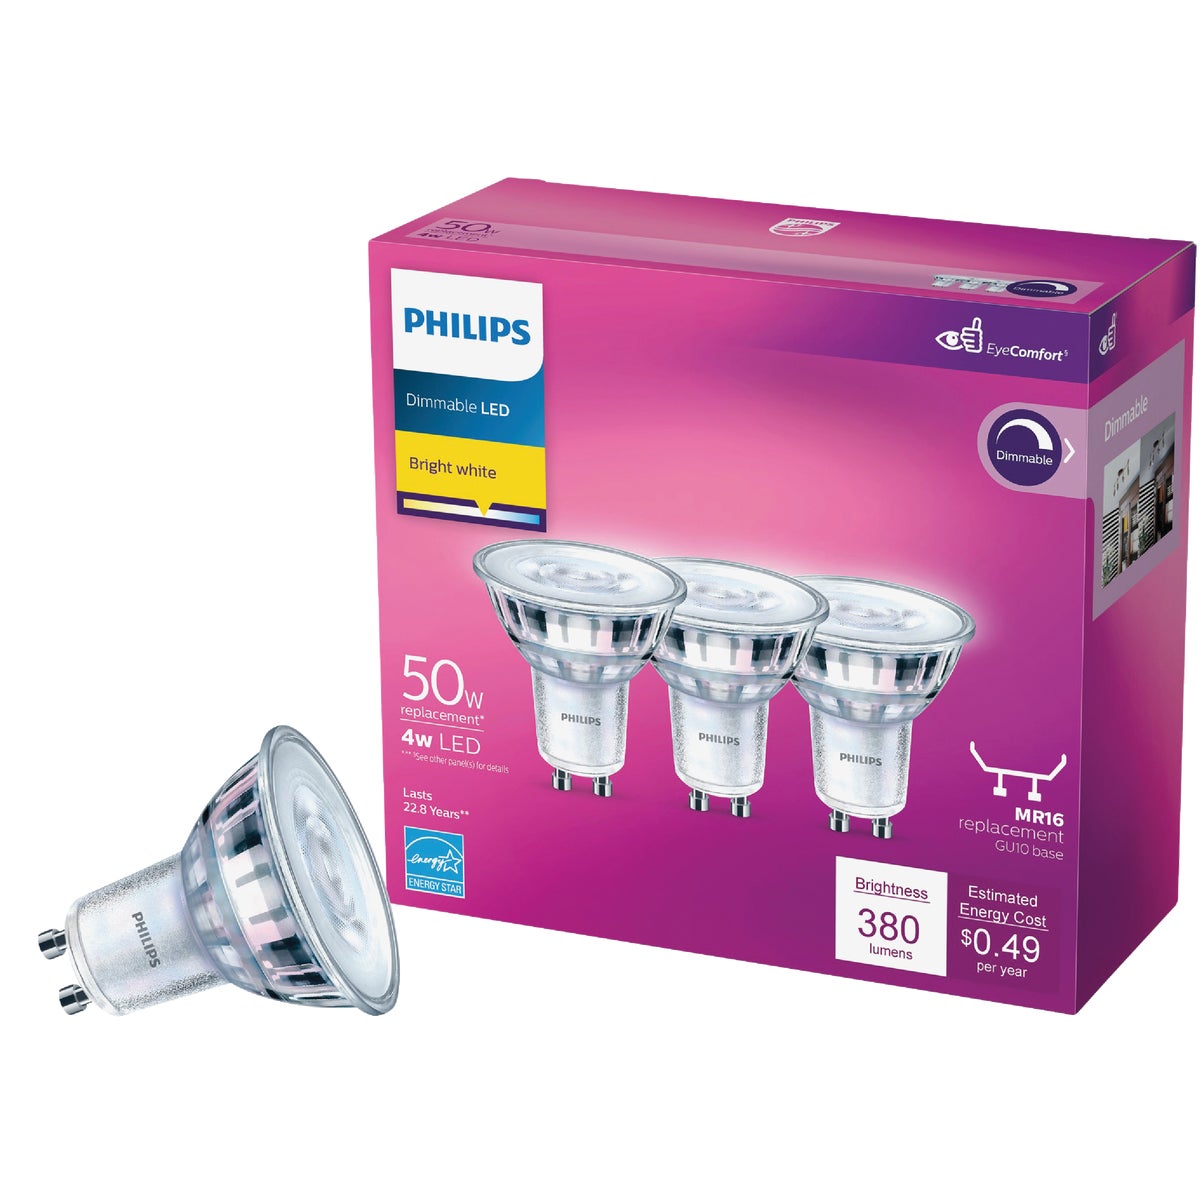 Philips 50W Equivalent Bright White MR16 GU10 Base LED Floodlight Light Bulb (3-Pack)